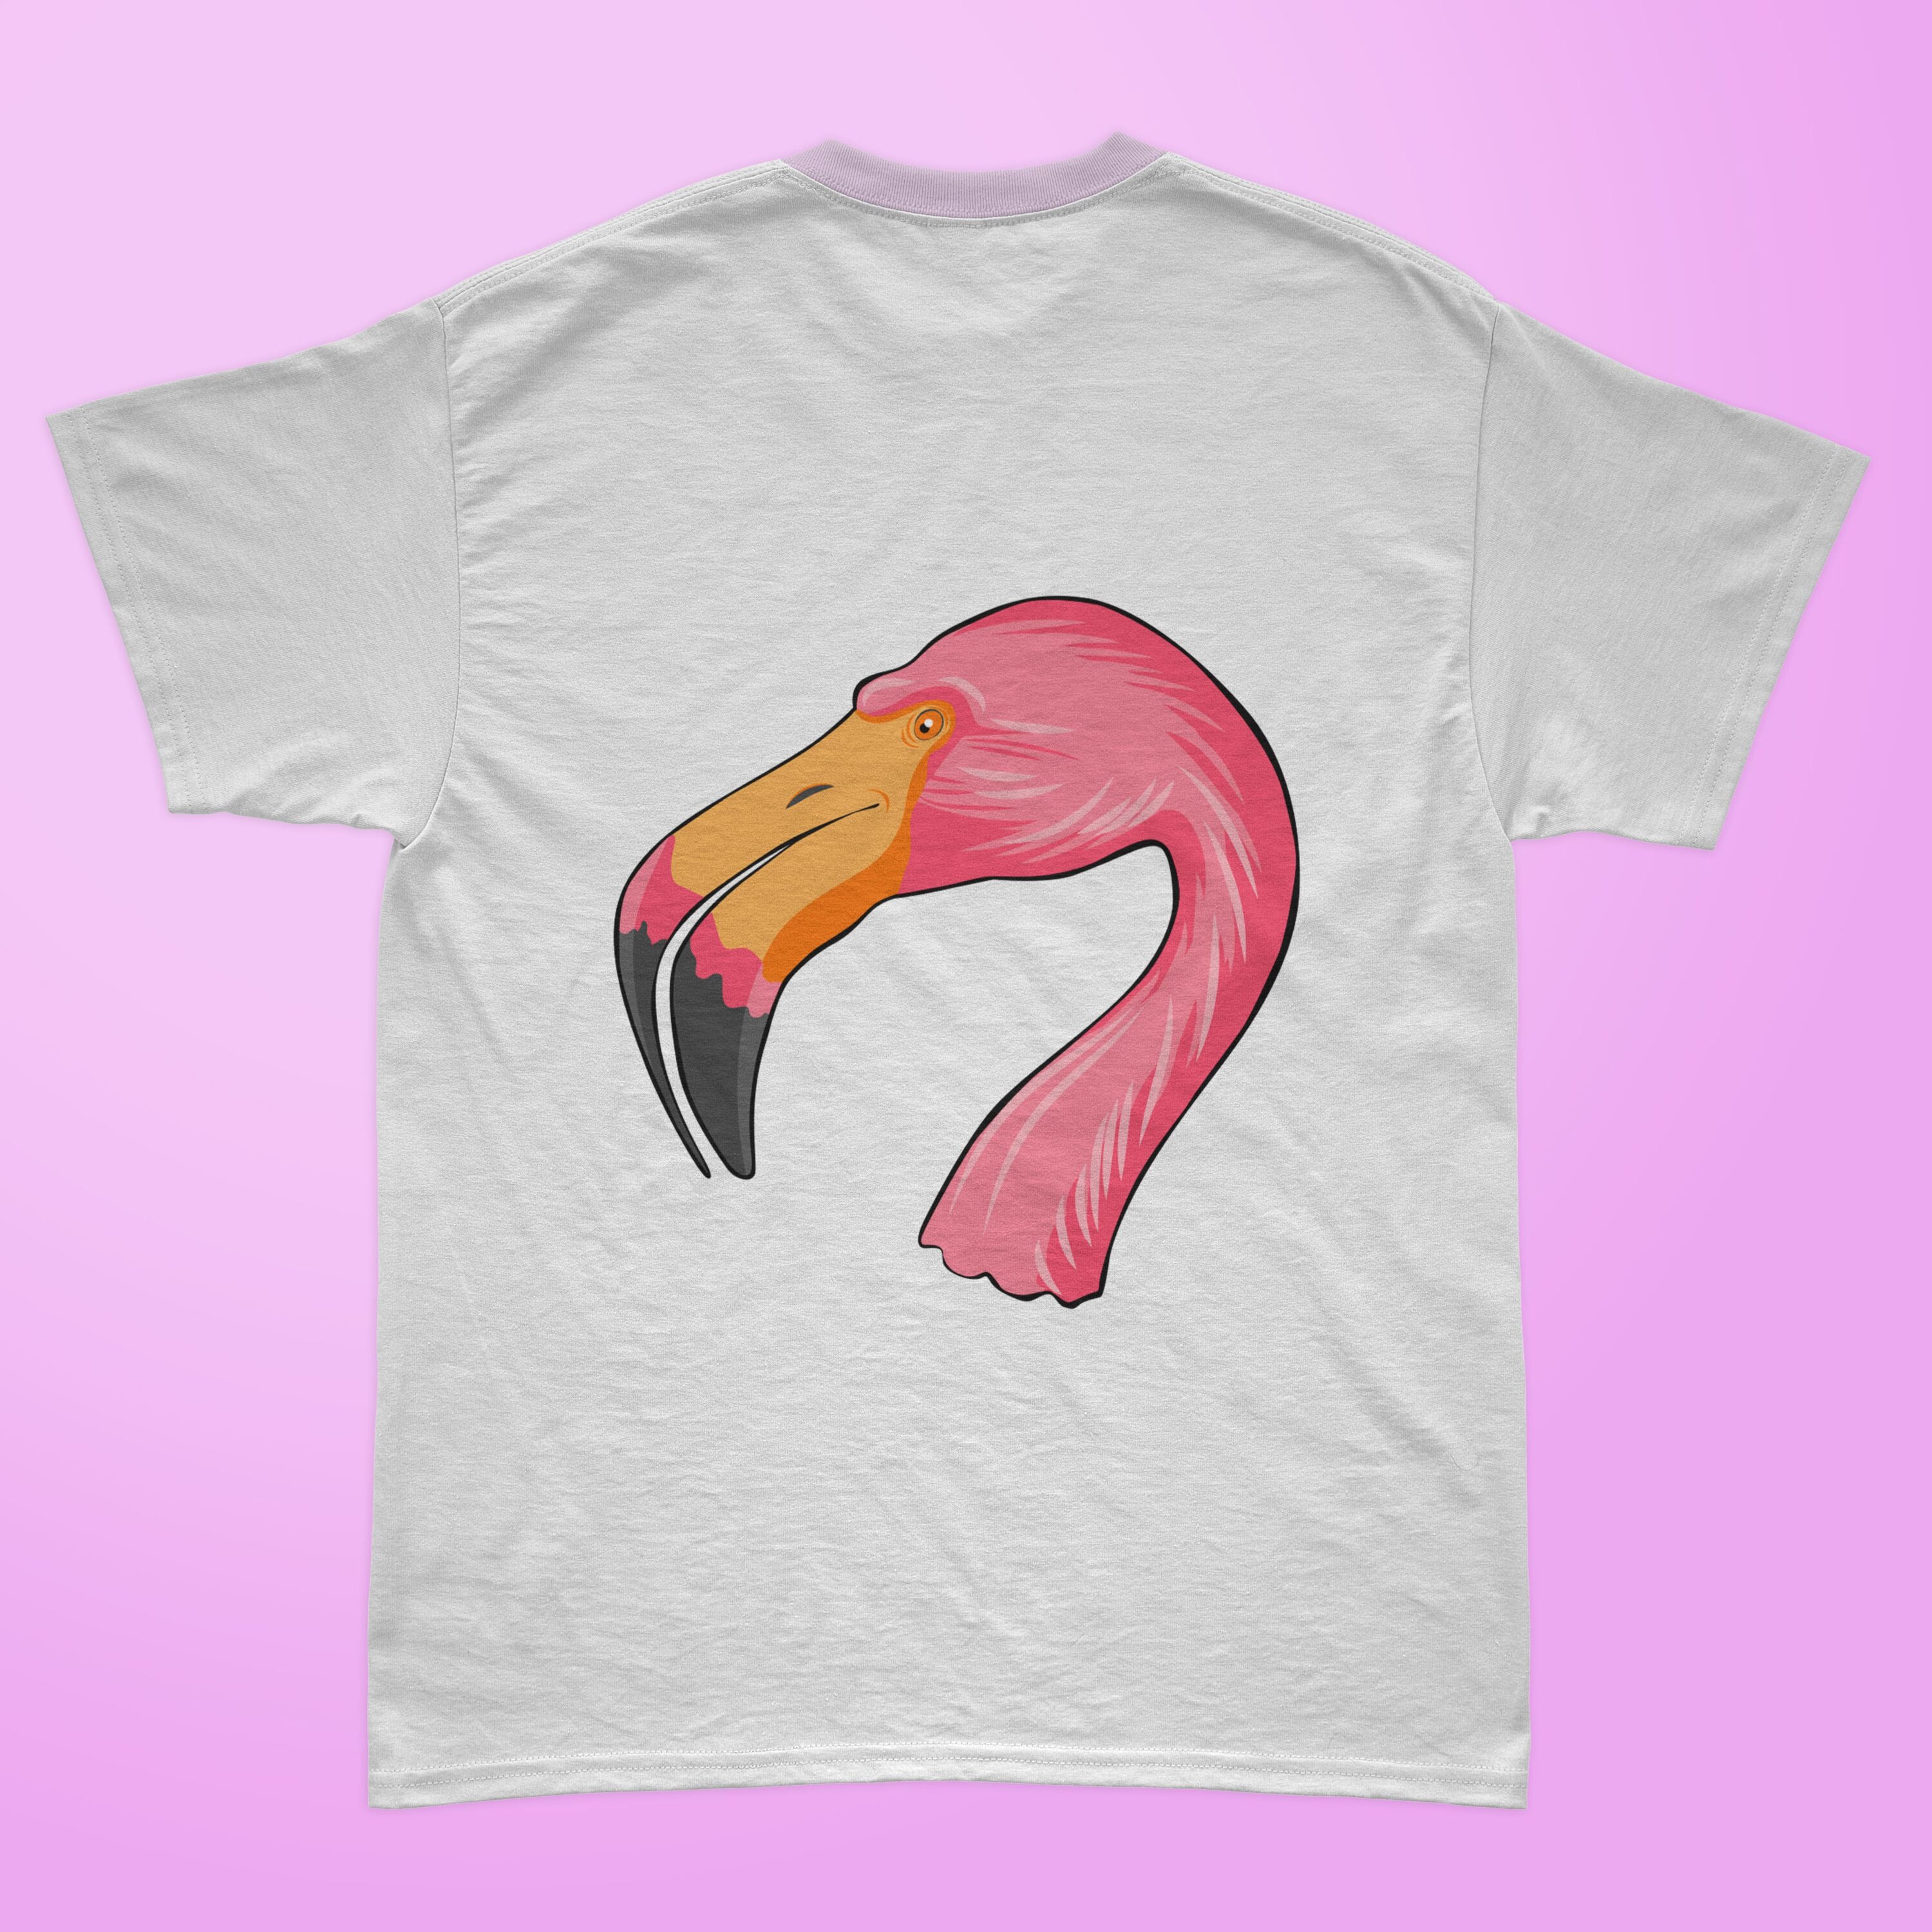 Flamingo face on the white t-shirt.